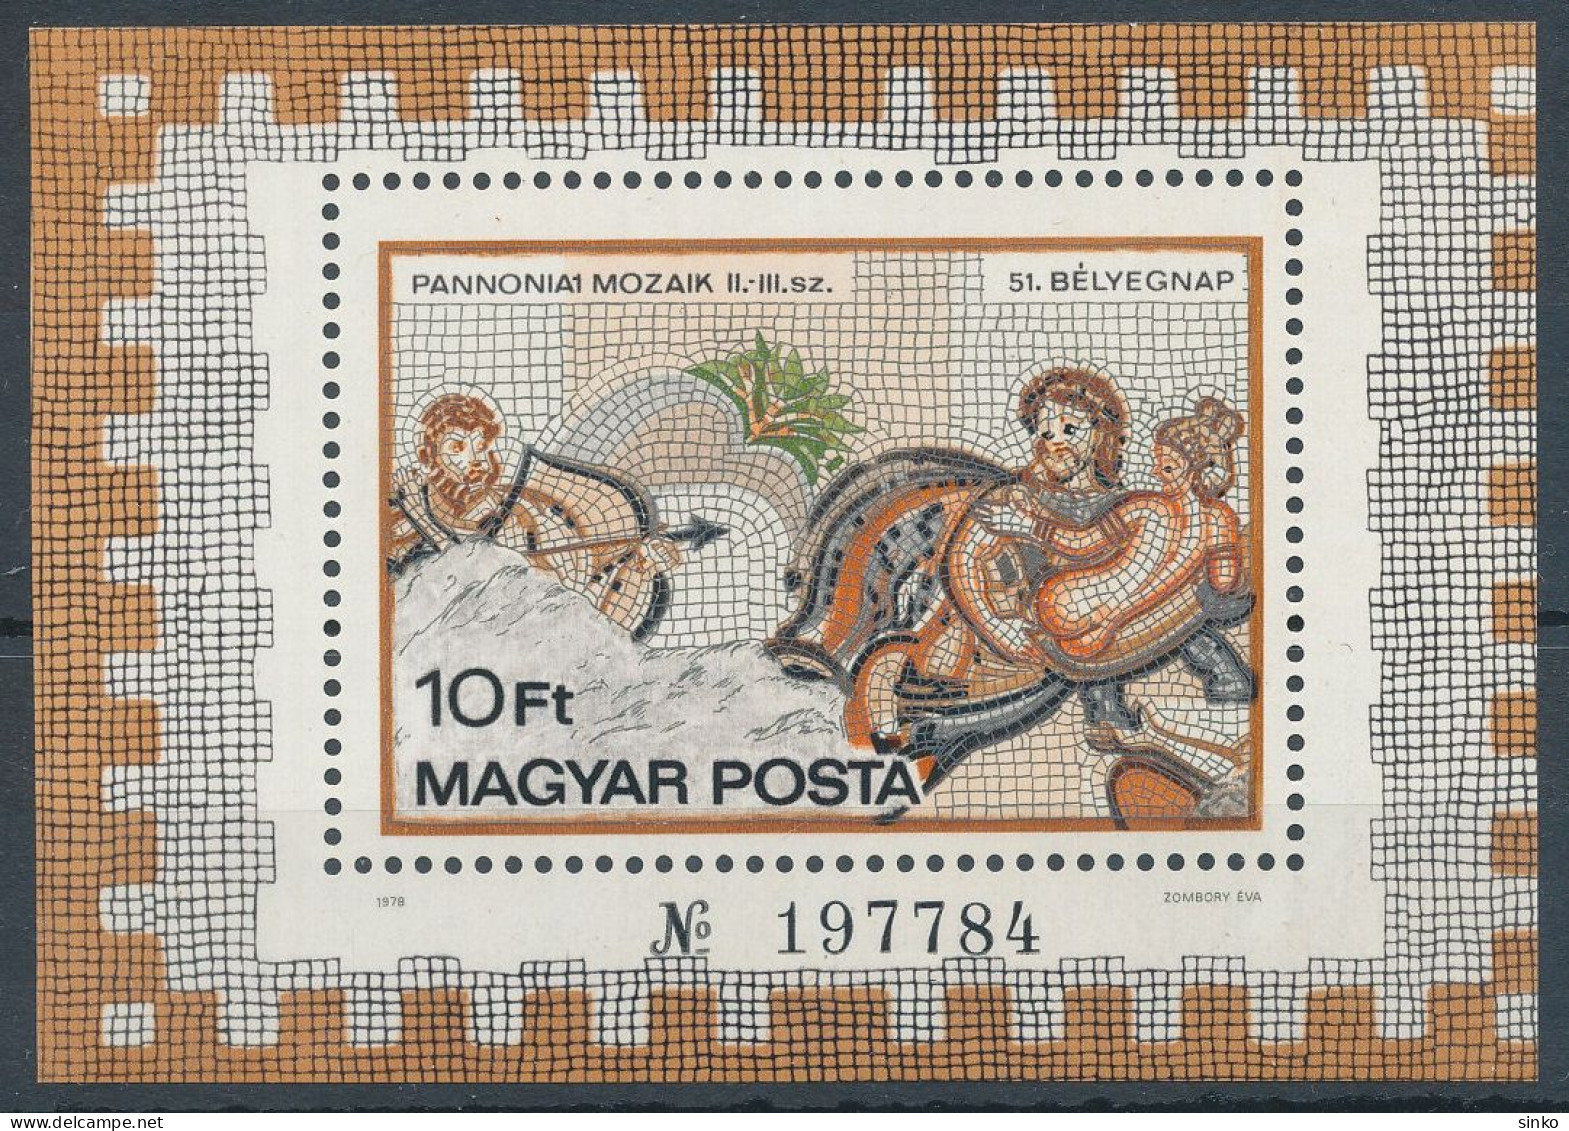 1978. Stamp Day (51.) - Pannonian Mosaics - Block - Misprint - Errors, Freaks & Oddities (EFO)